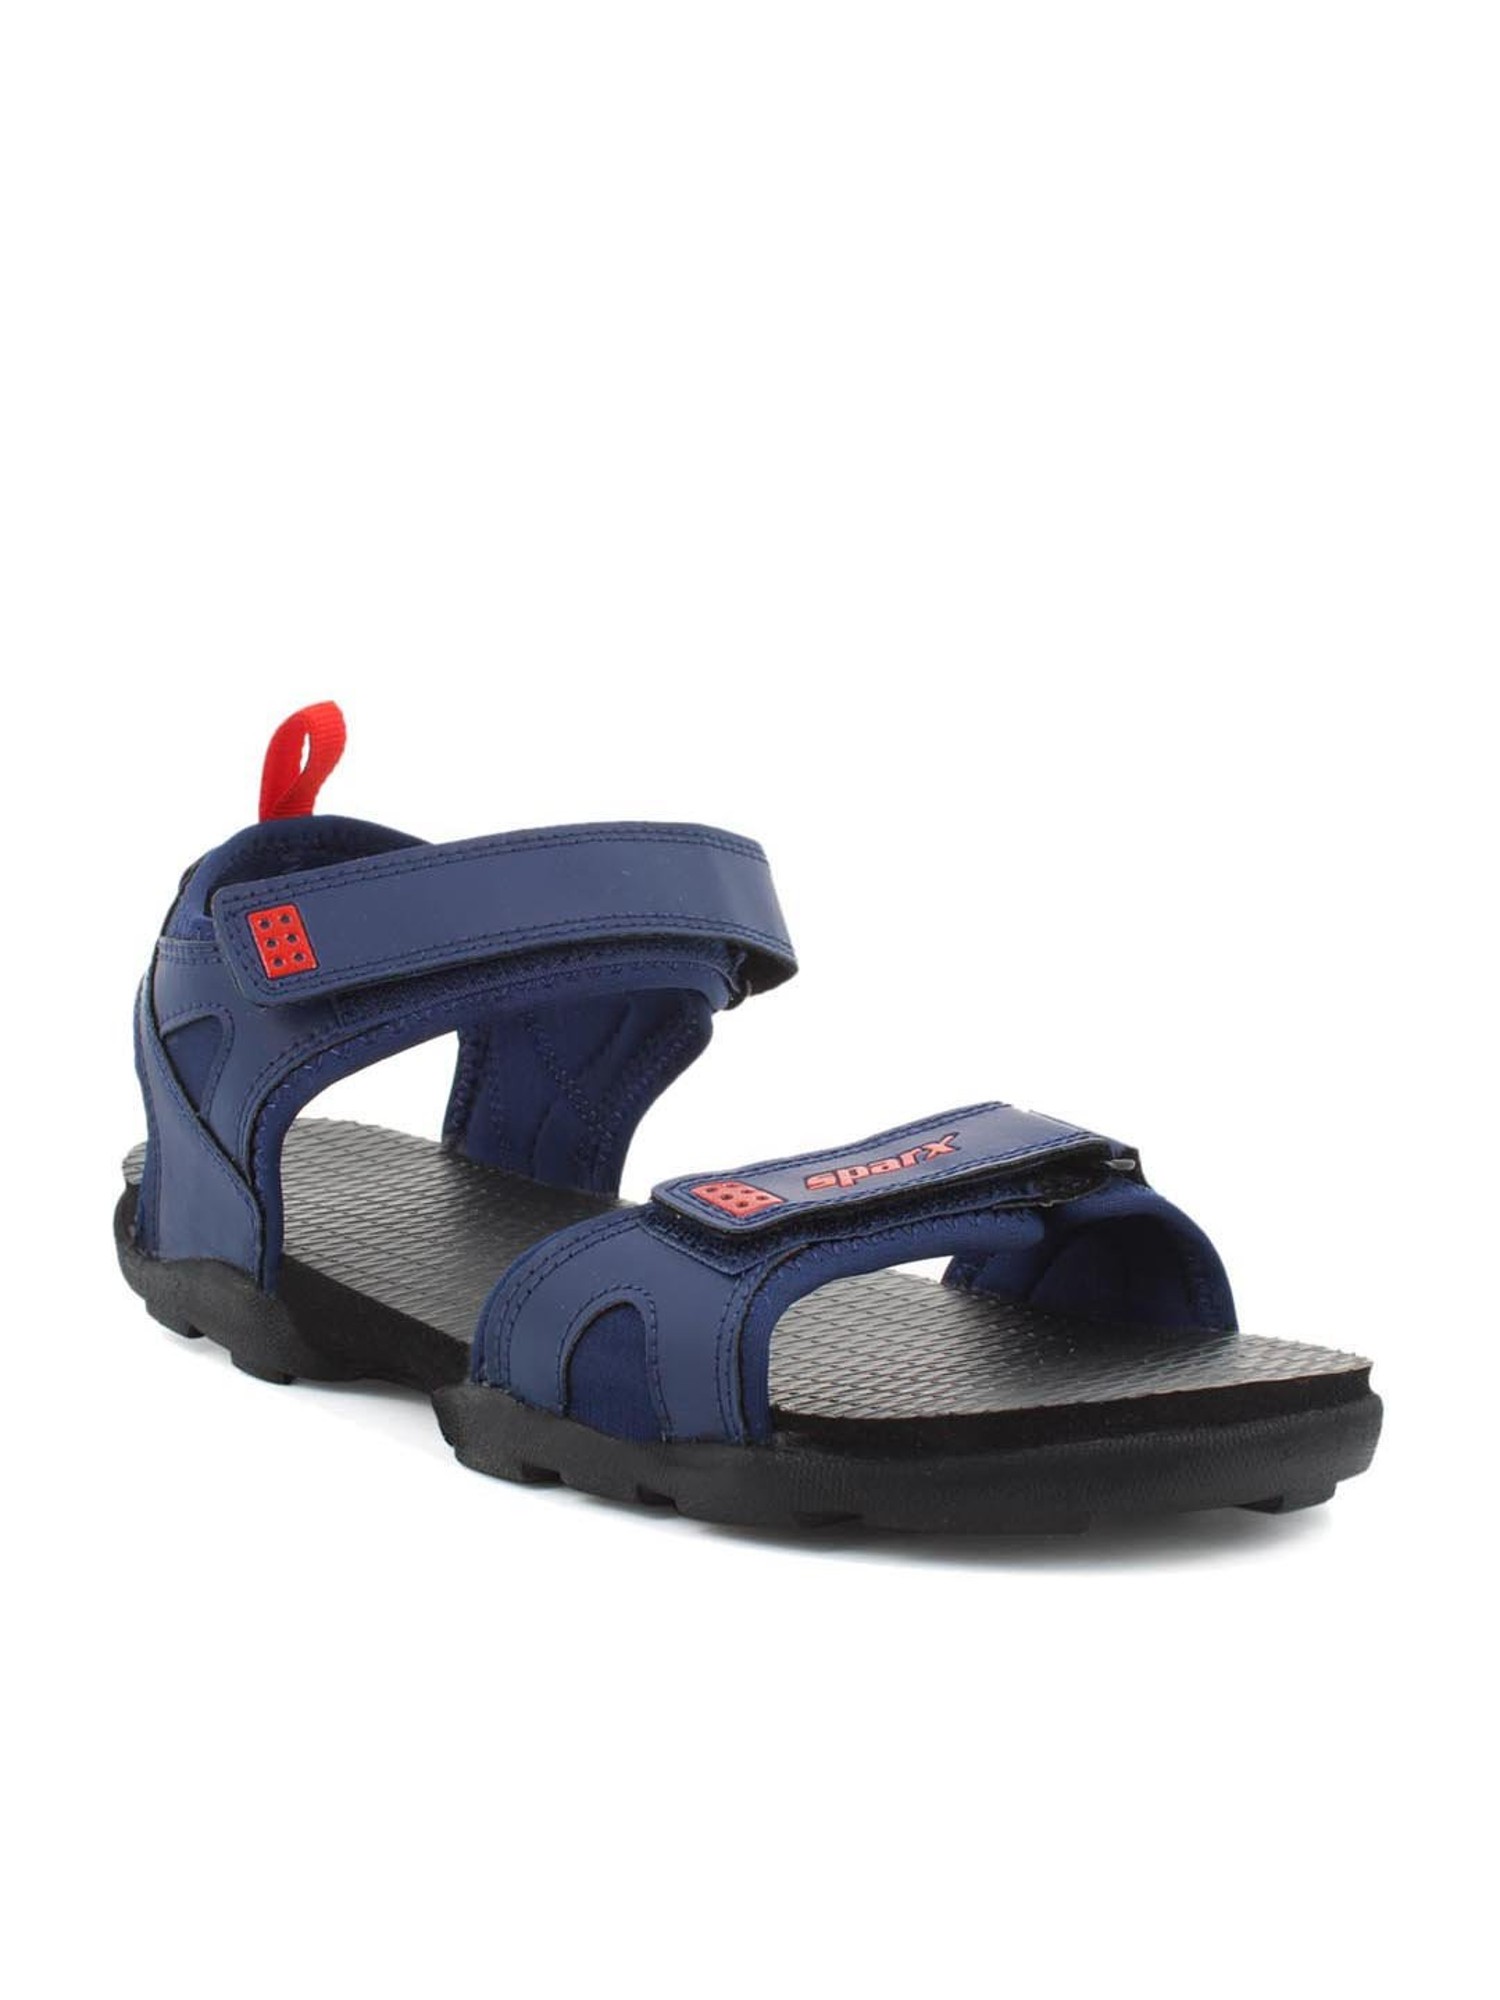 Buy Sparx Men's Blue Floater Sandals for Men at Best Price @ Tata CLiQ